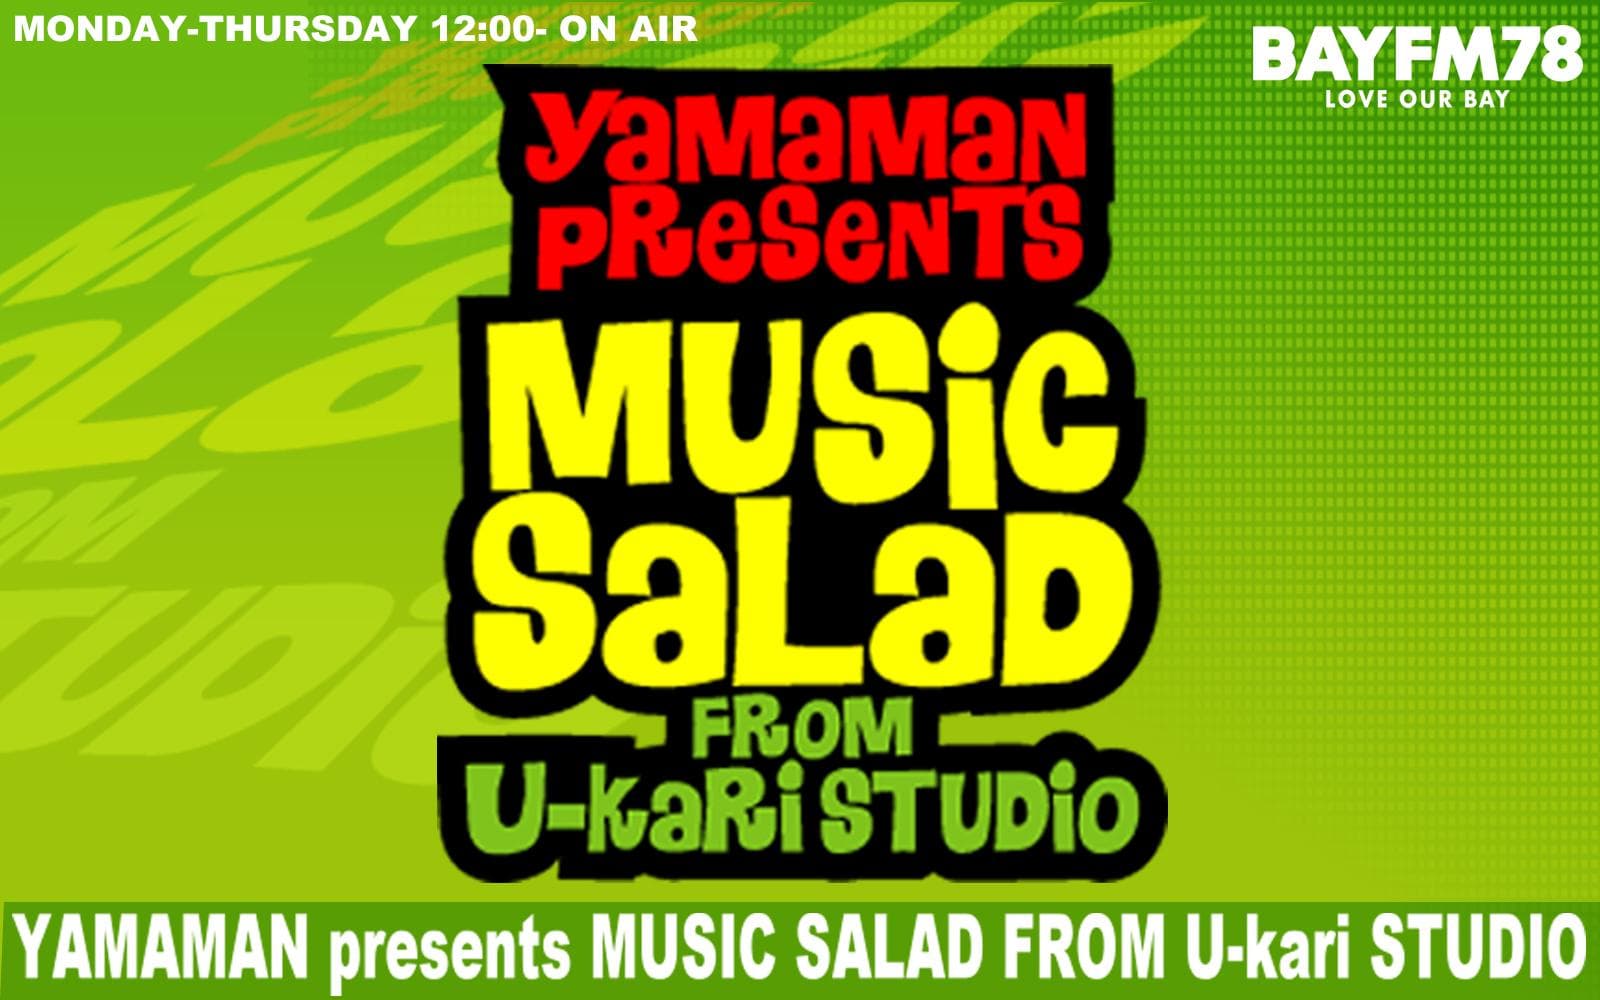 YAMAMAN presents MUSIC SALAD from U-kari Studioのヘッダー画像